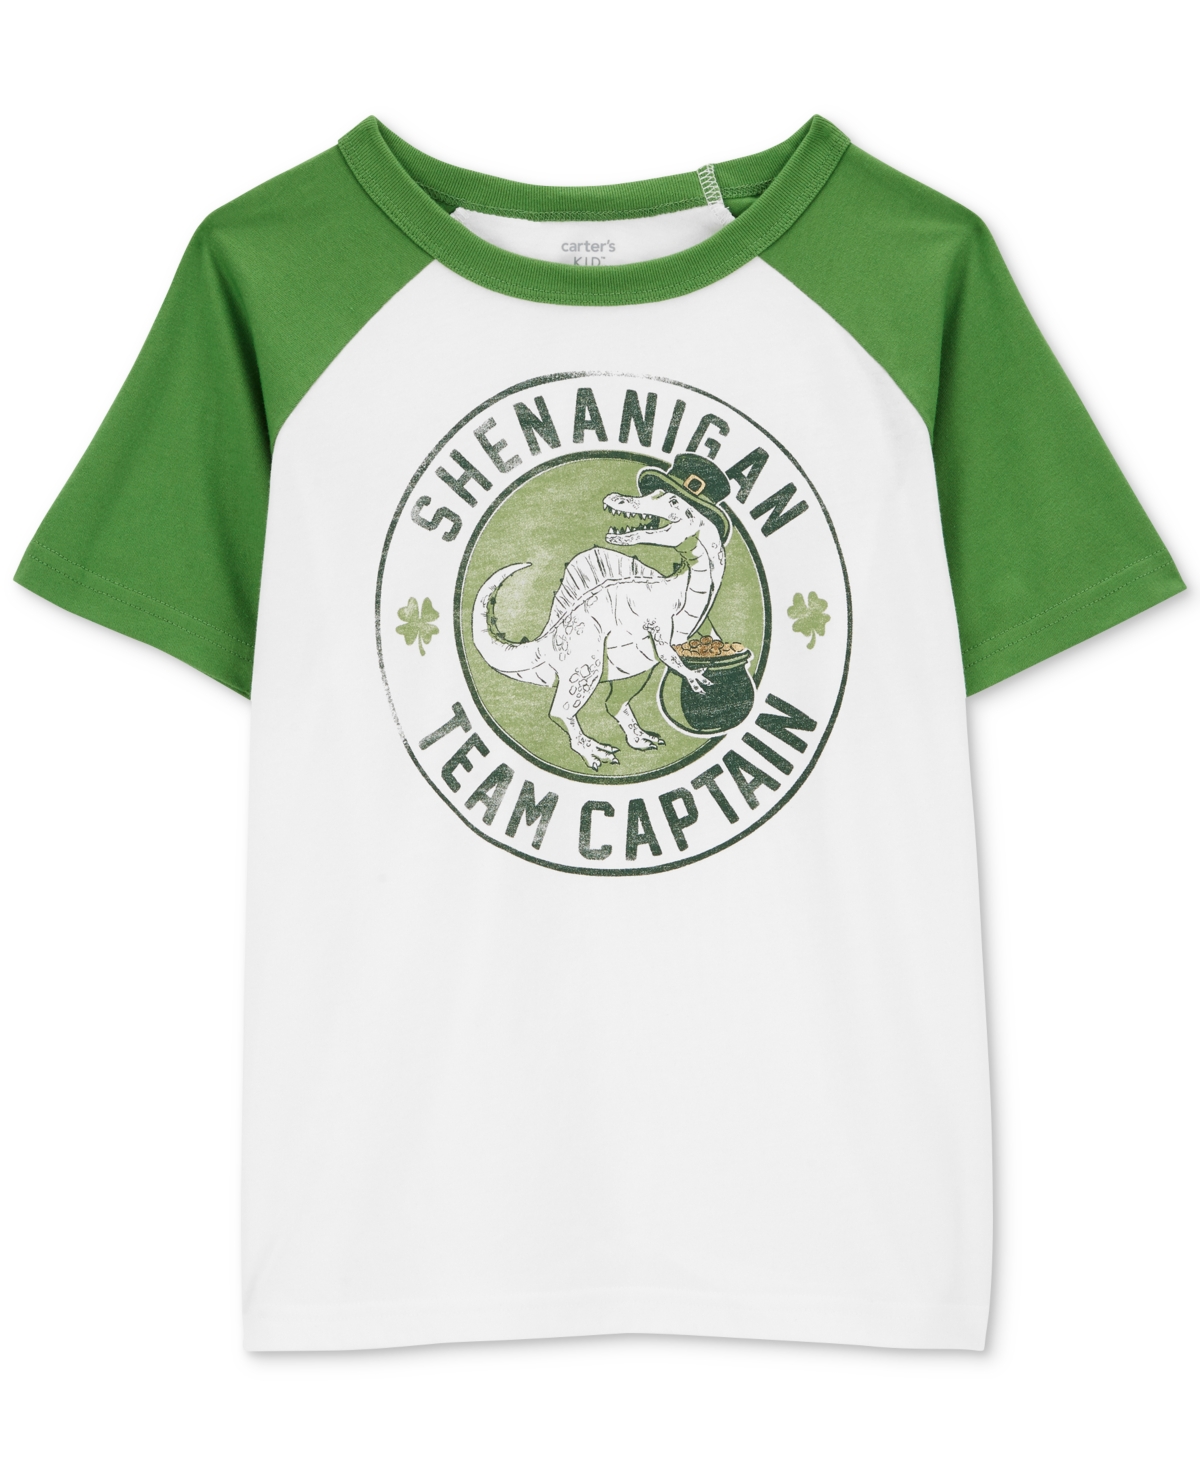 Carter's Kids' Big Boys Shenanigan Team Captain Graphic T-shirt In Green